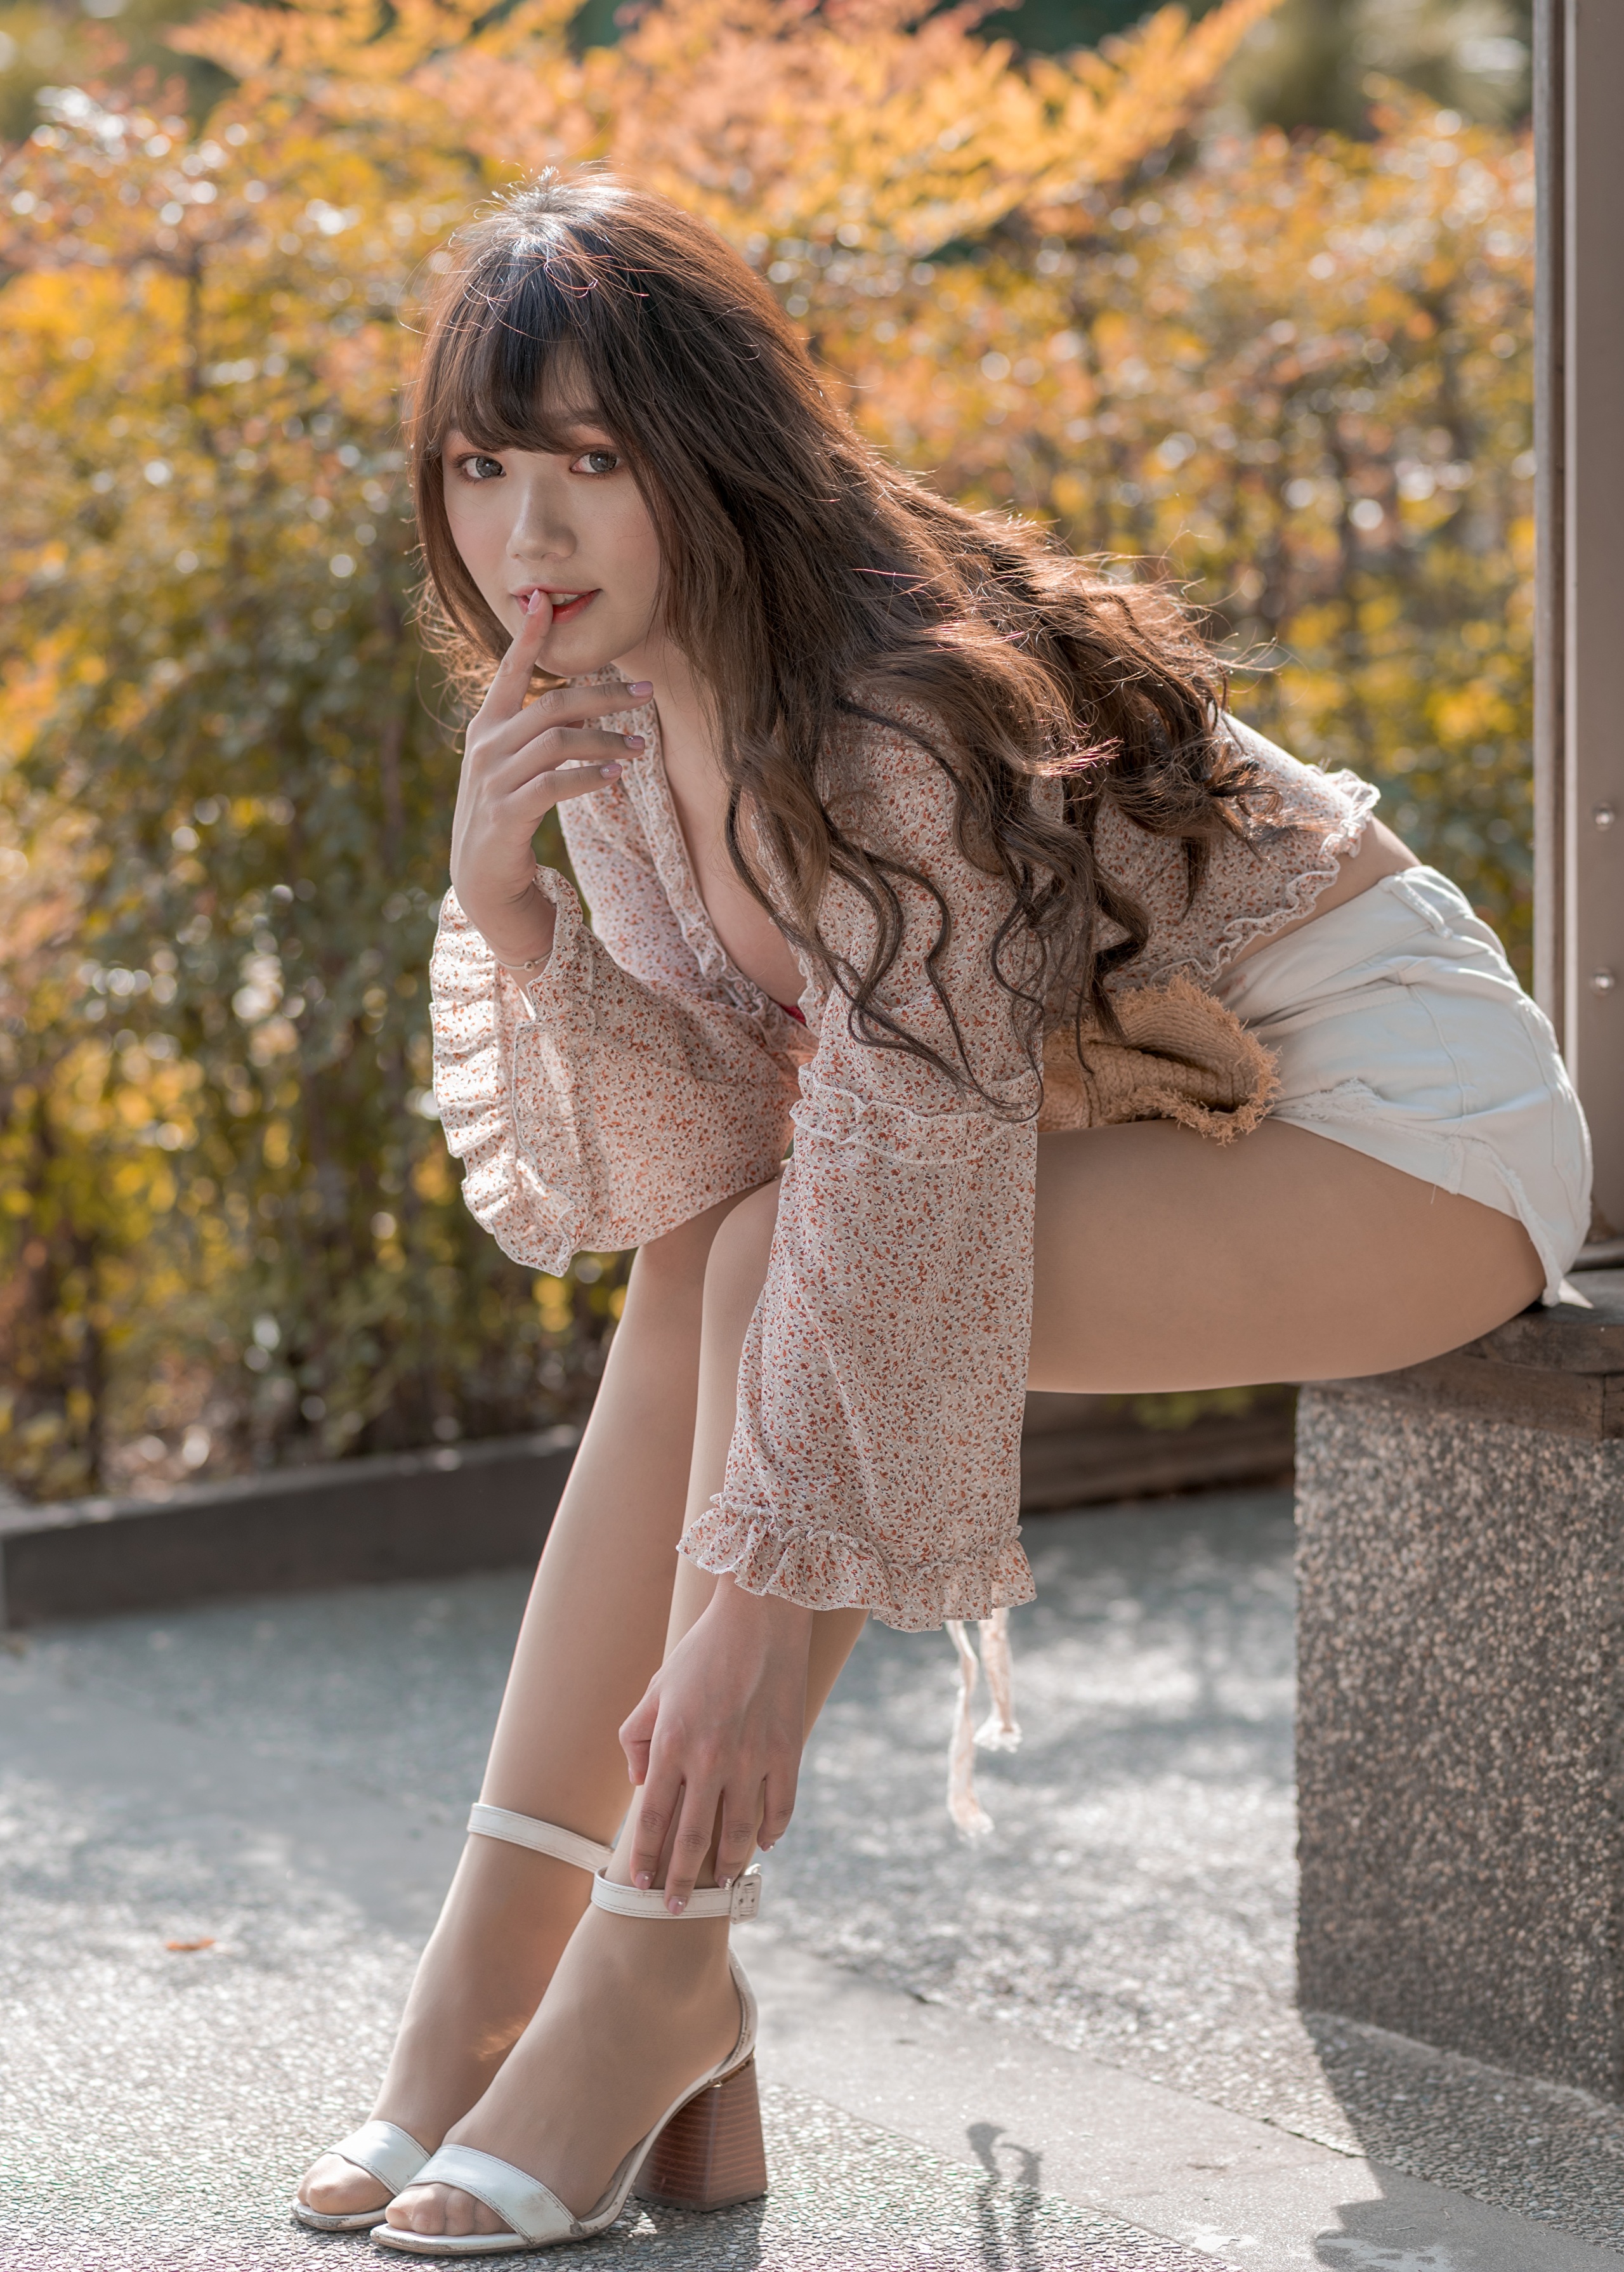 Asian Model Women Long Hair Dark Hair Sitting Sandals Nylons White Shoes Bushes Depth Of Field Blous 2560x3581